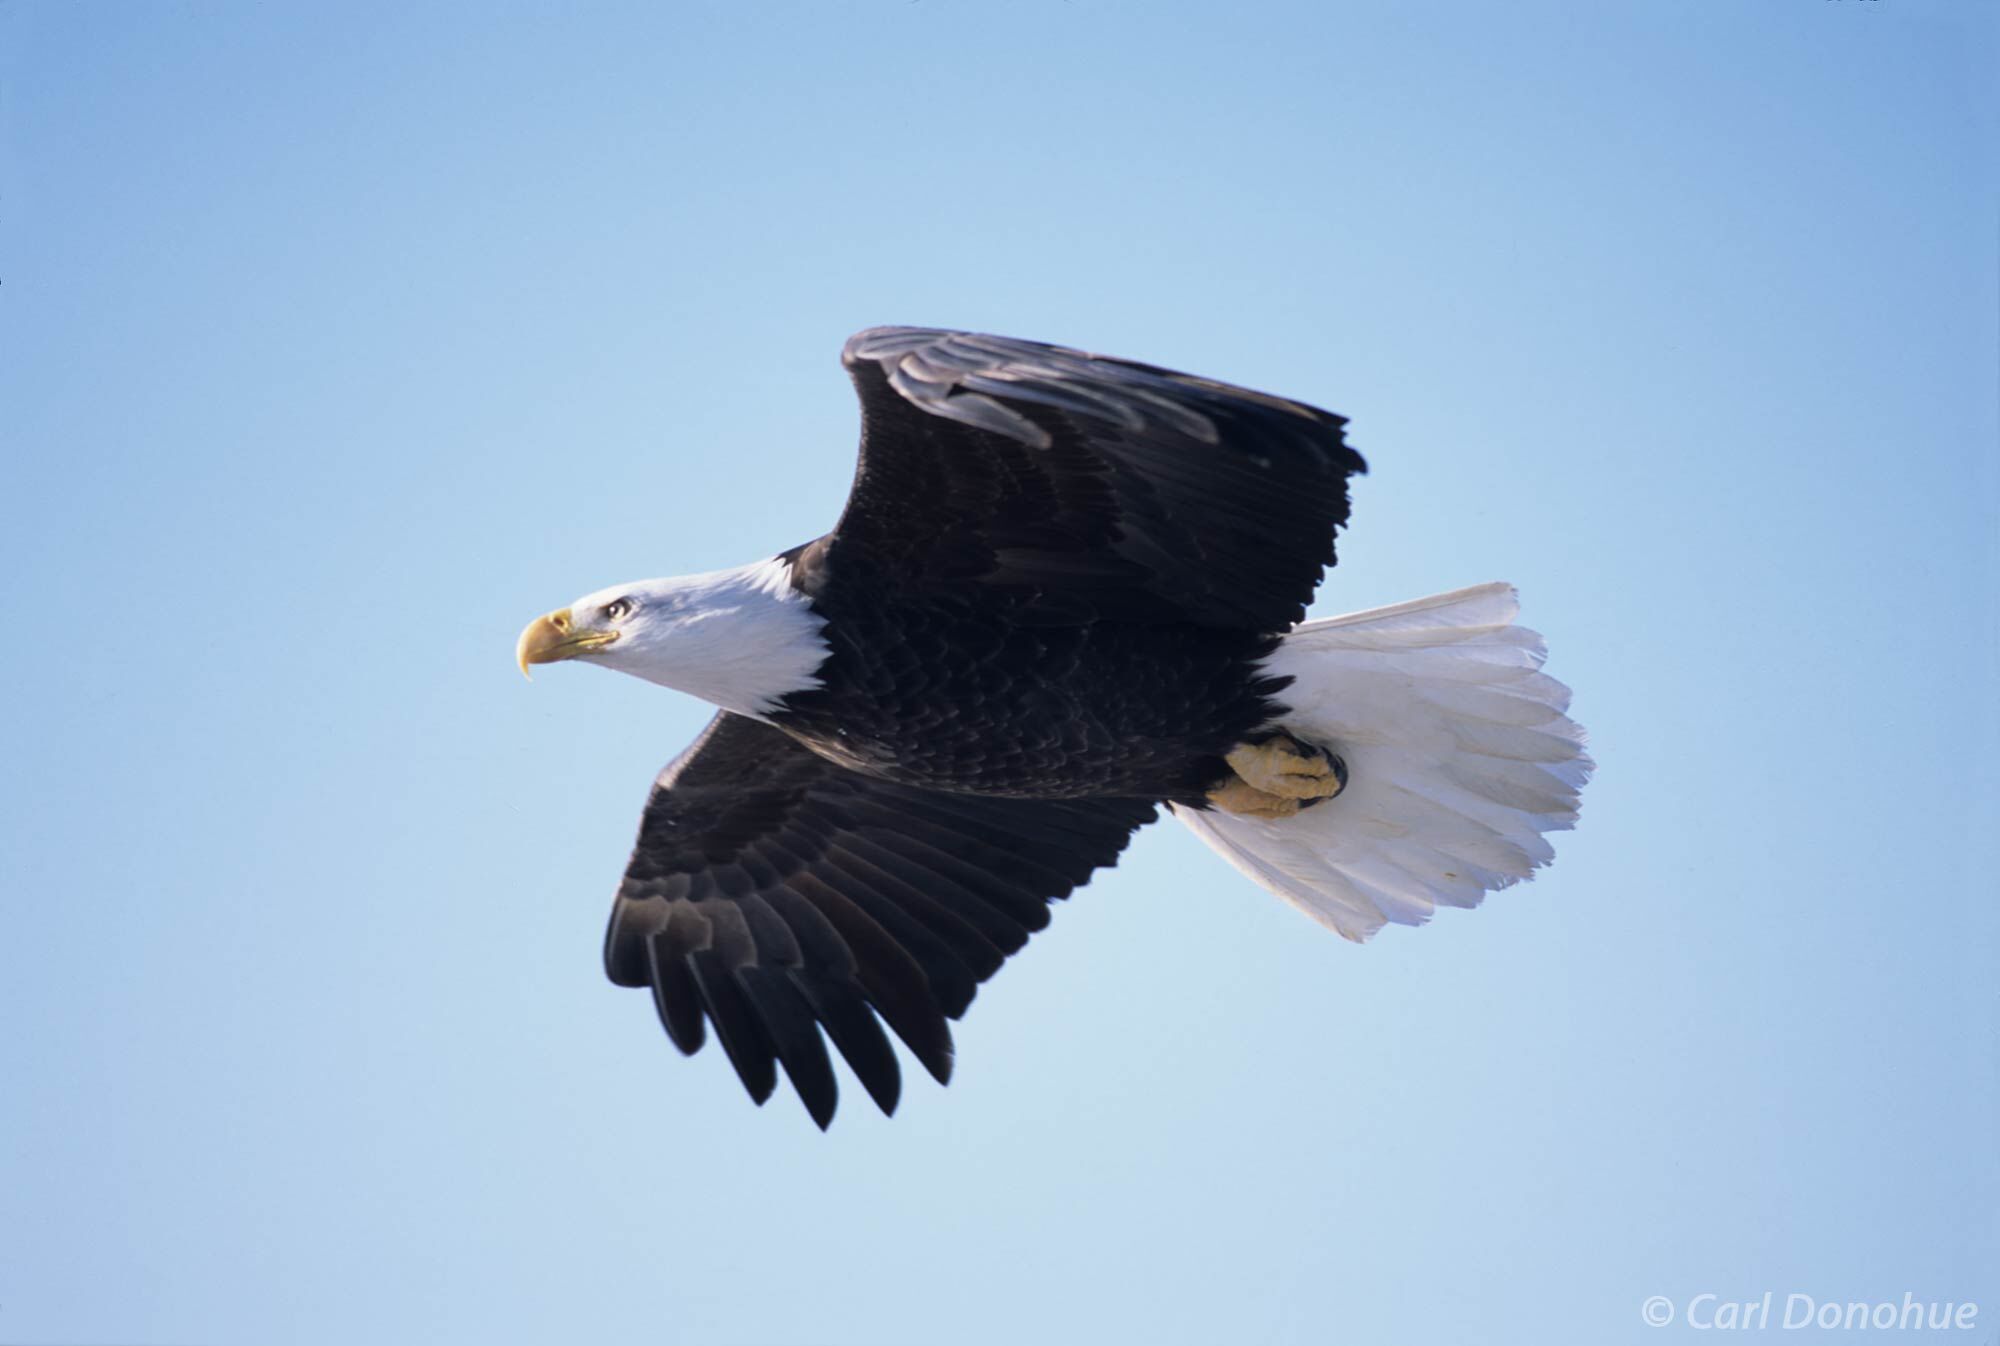 Soaring Bald Eagle in flight photos, against a deep blue sky, Homer, Alaska.  Bald eagle fishing in Kachemak Bay, near Homer...